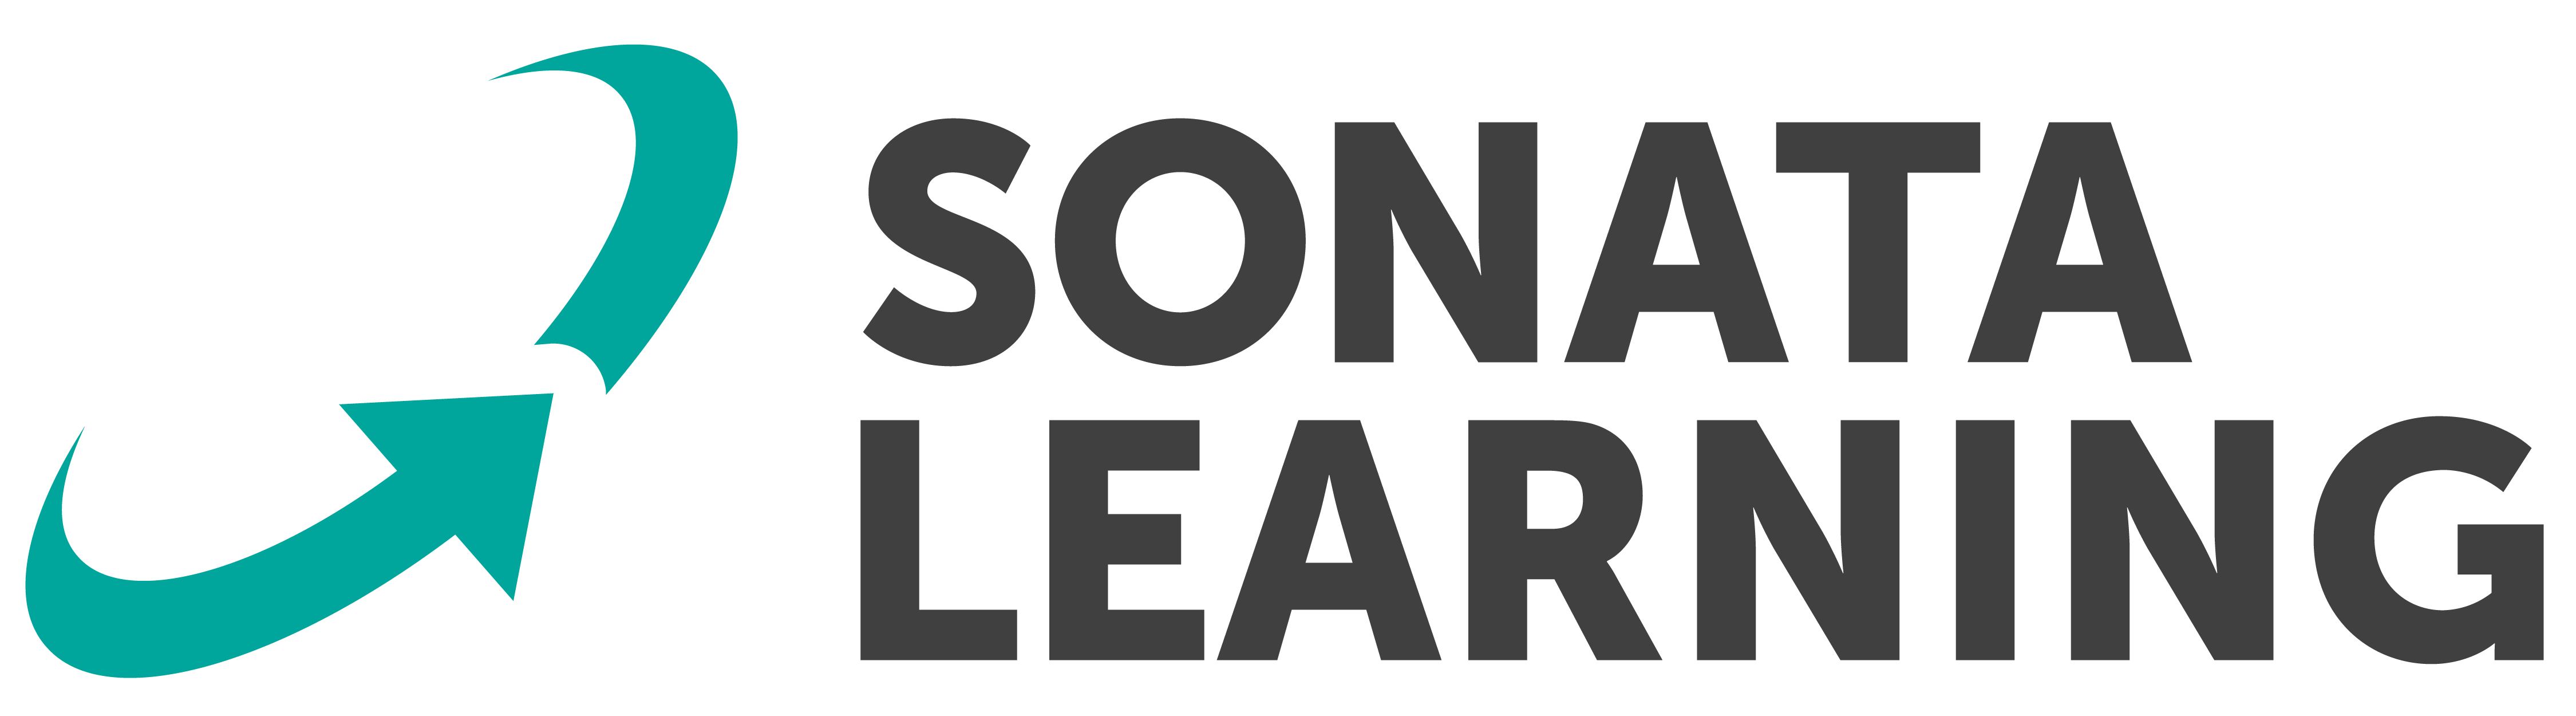 Sonata Learning logo